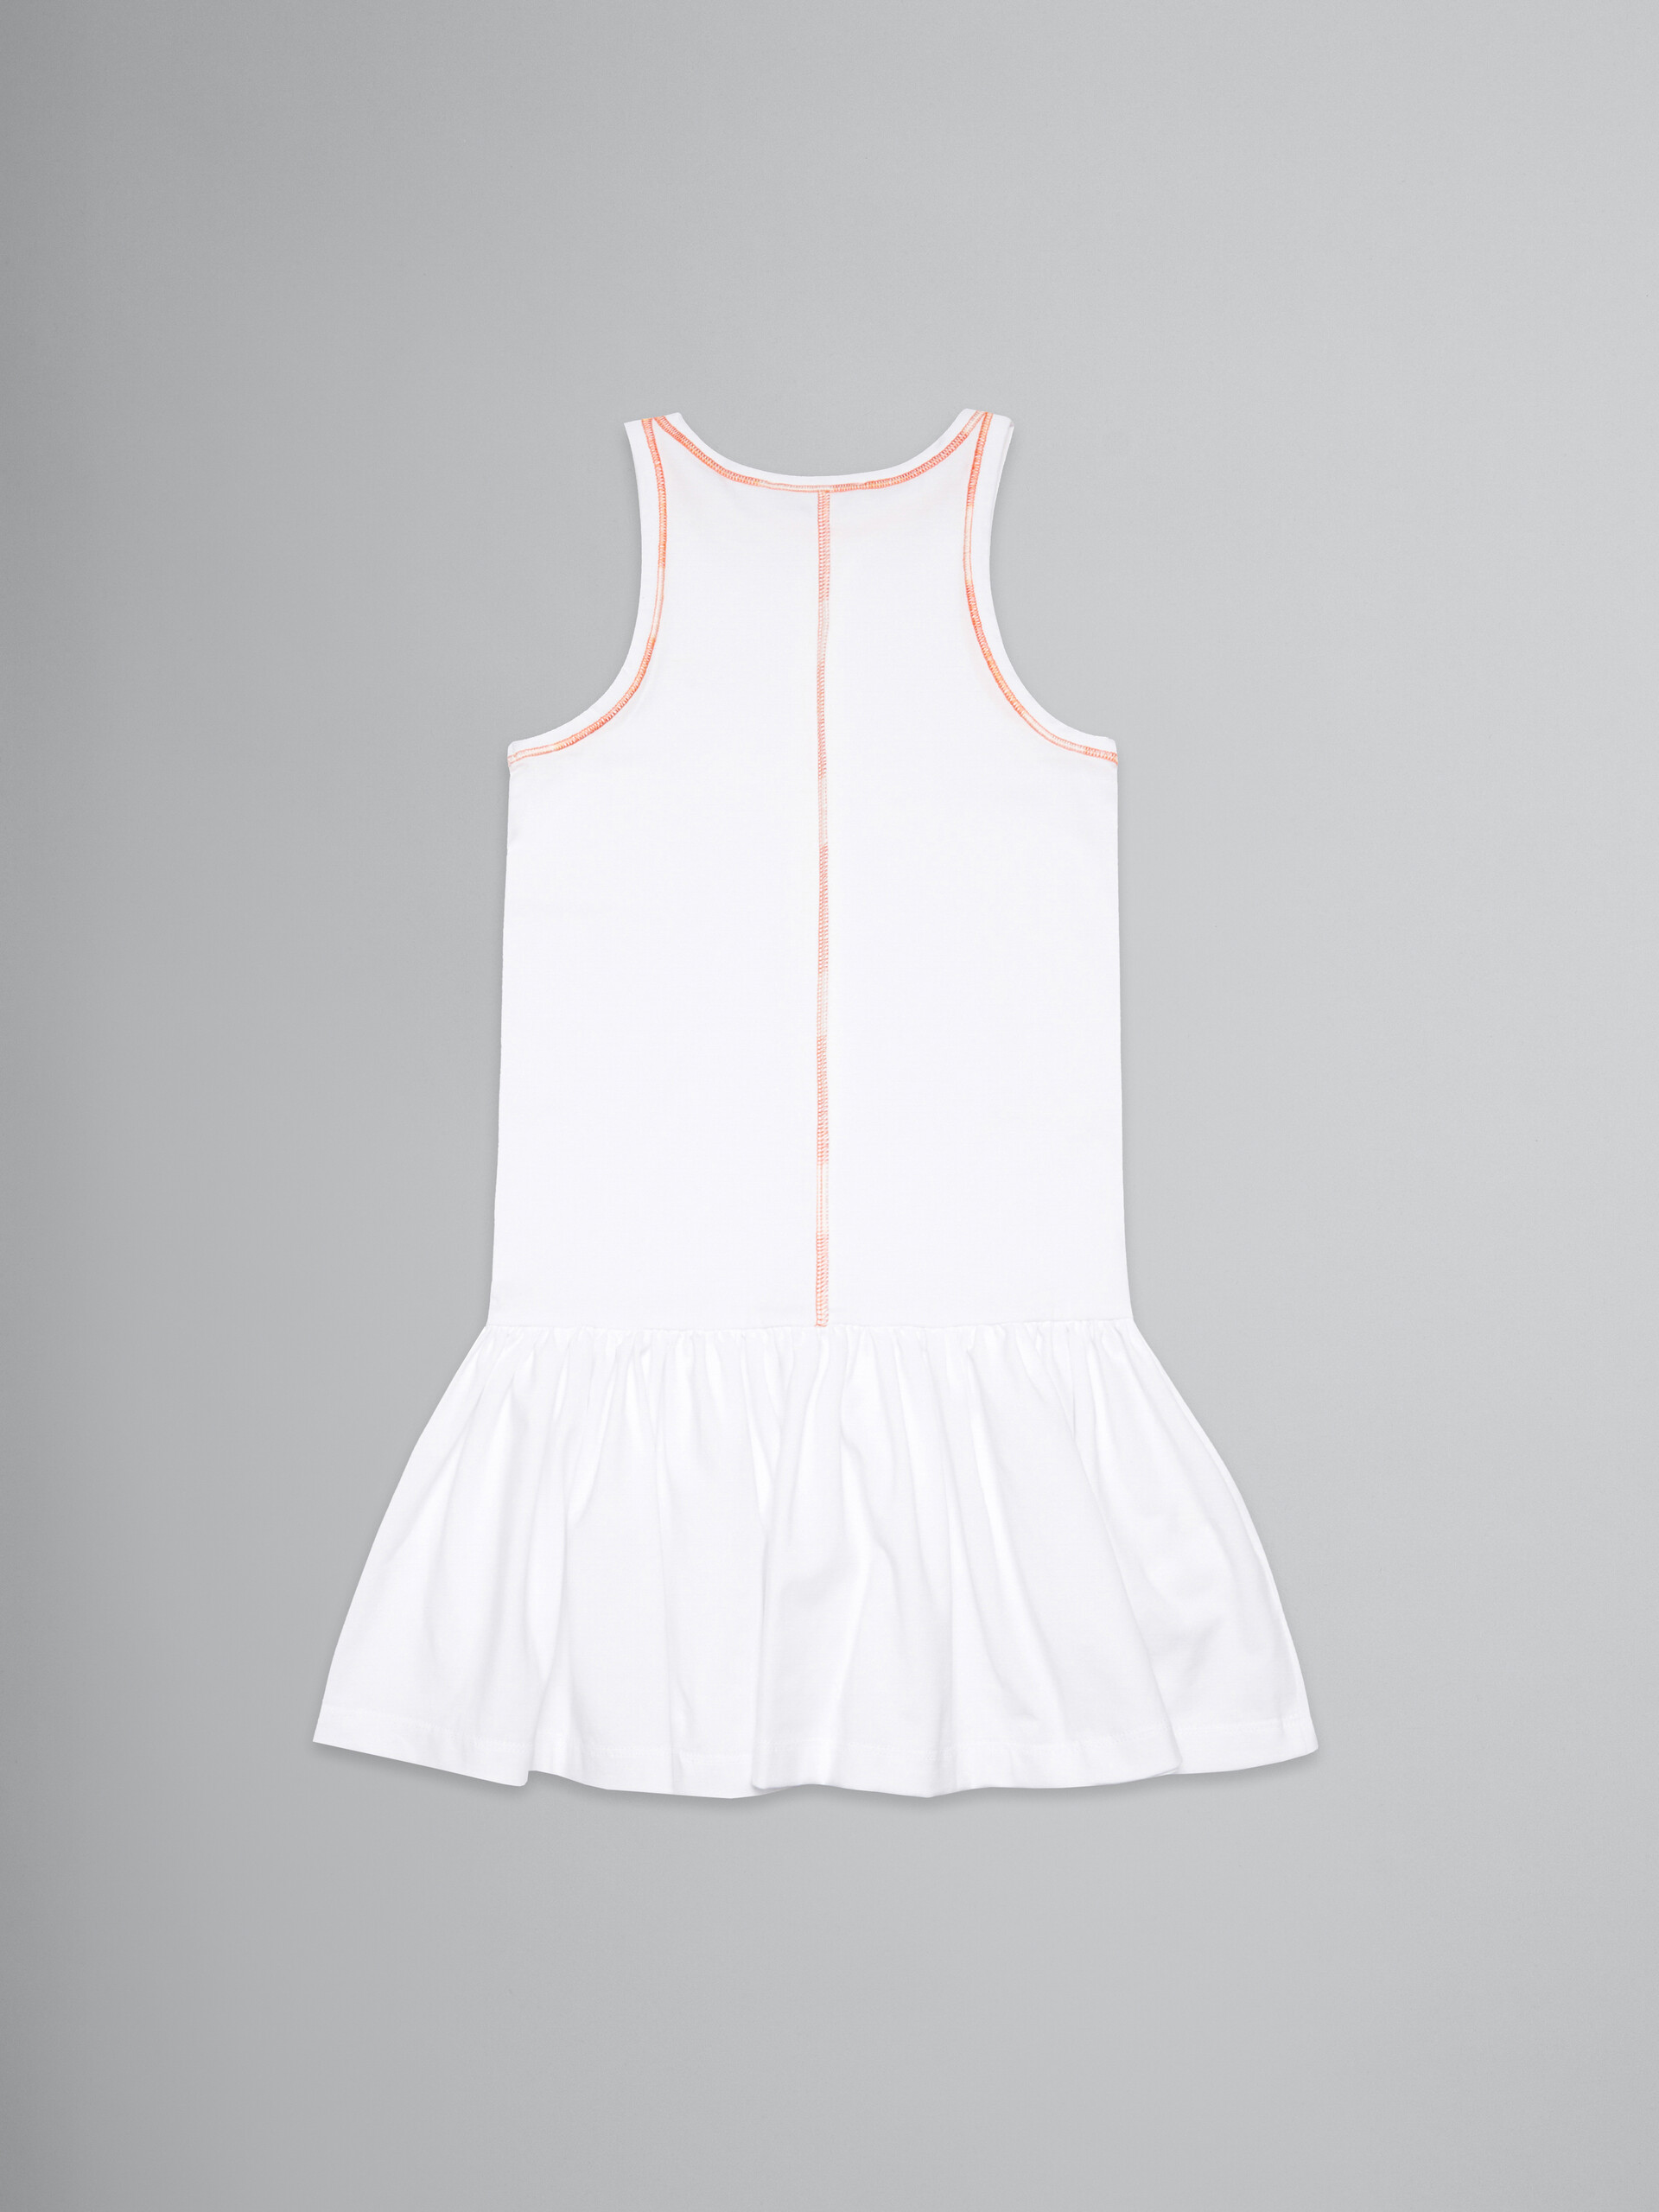 White sleeveless dress with stitching - Dresses - Image 2